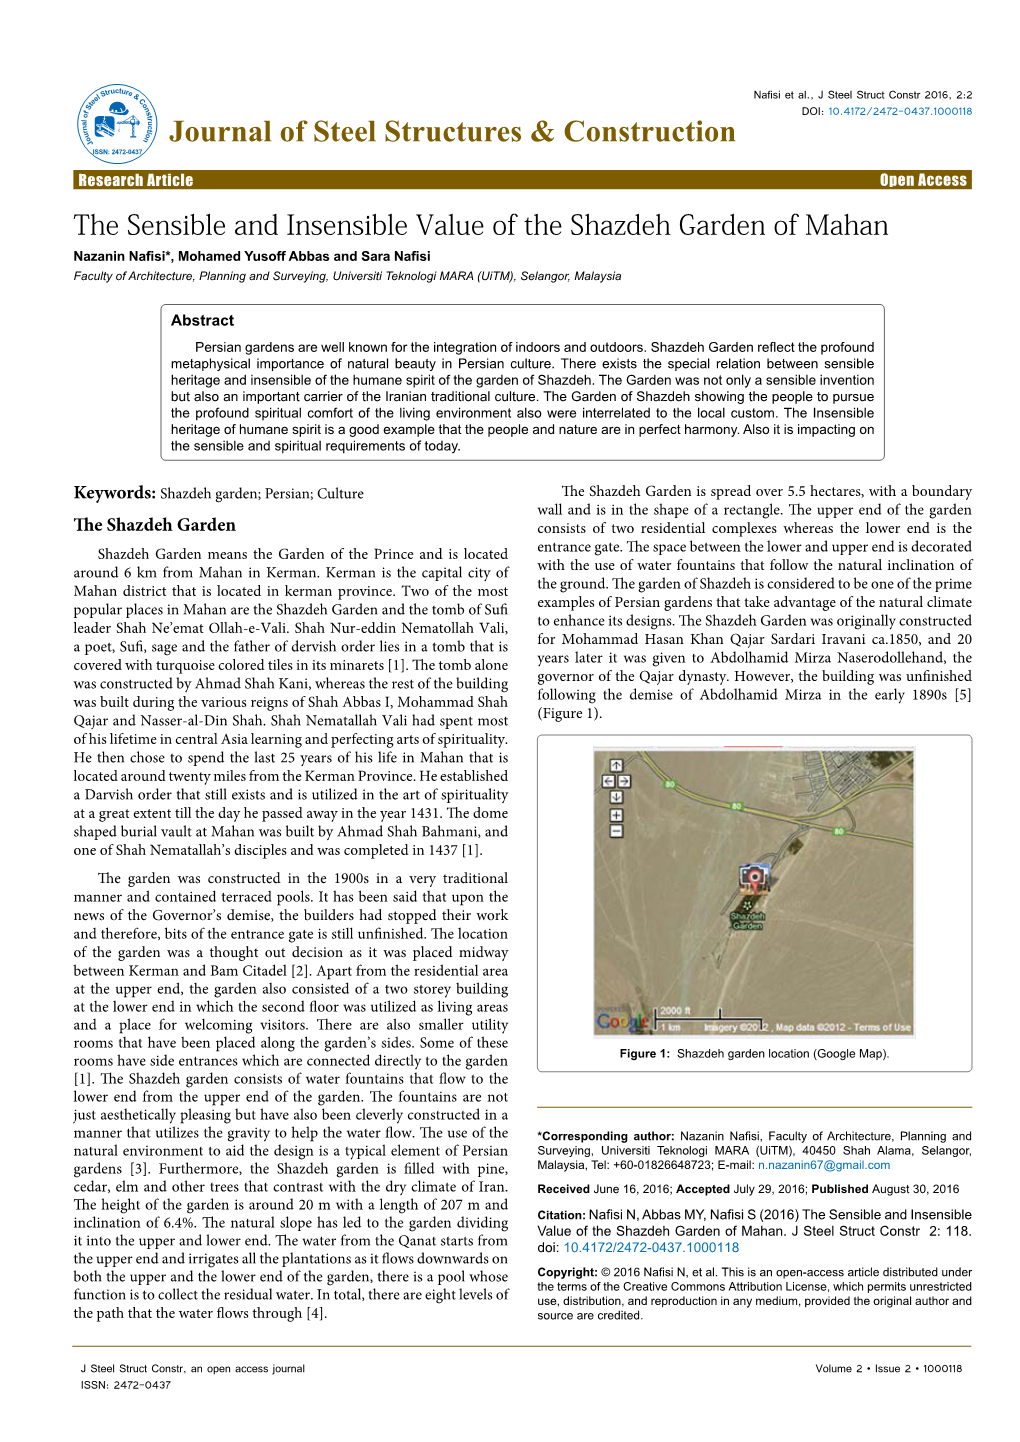 The Sensible and Insensible Value of the Shazdeh Garden of Mahan